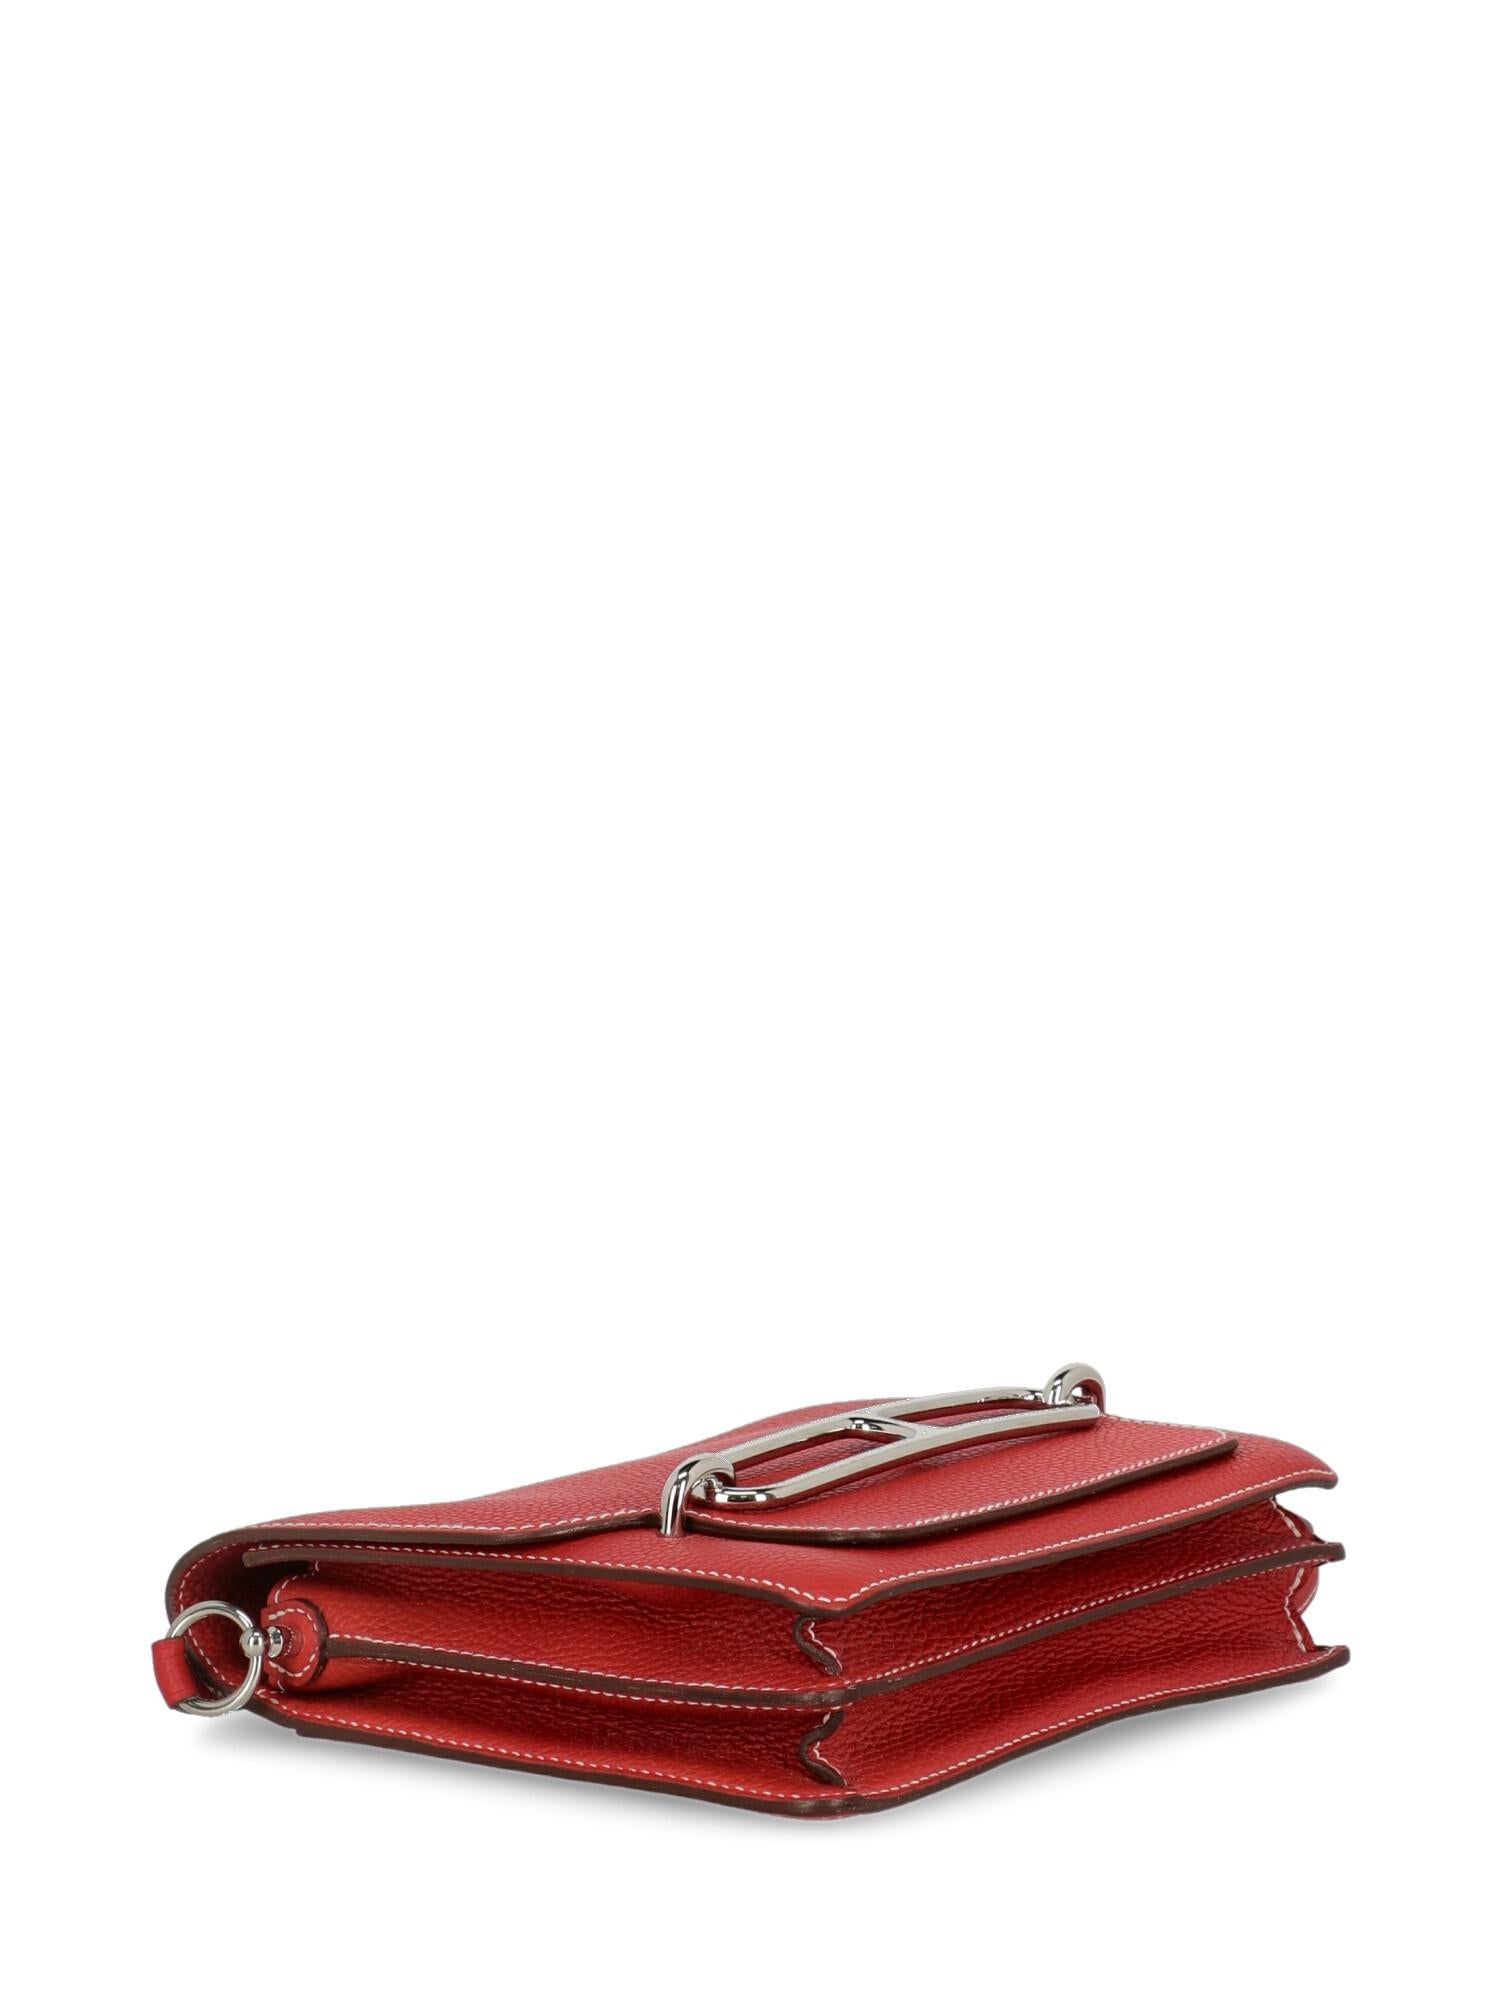 Women's Hermès women’s Cross body bag Red Leather For Sale